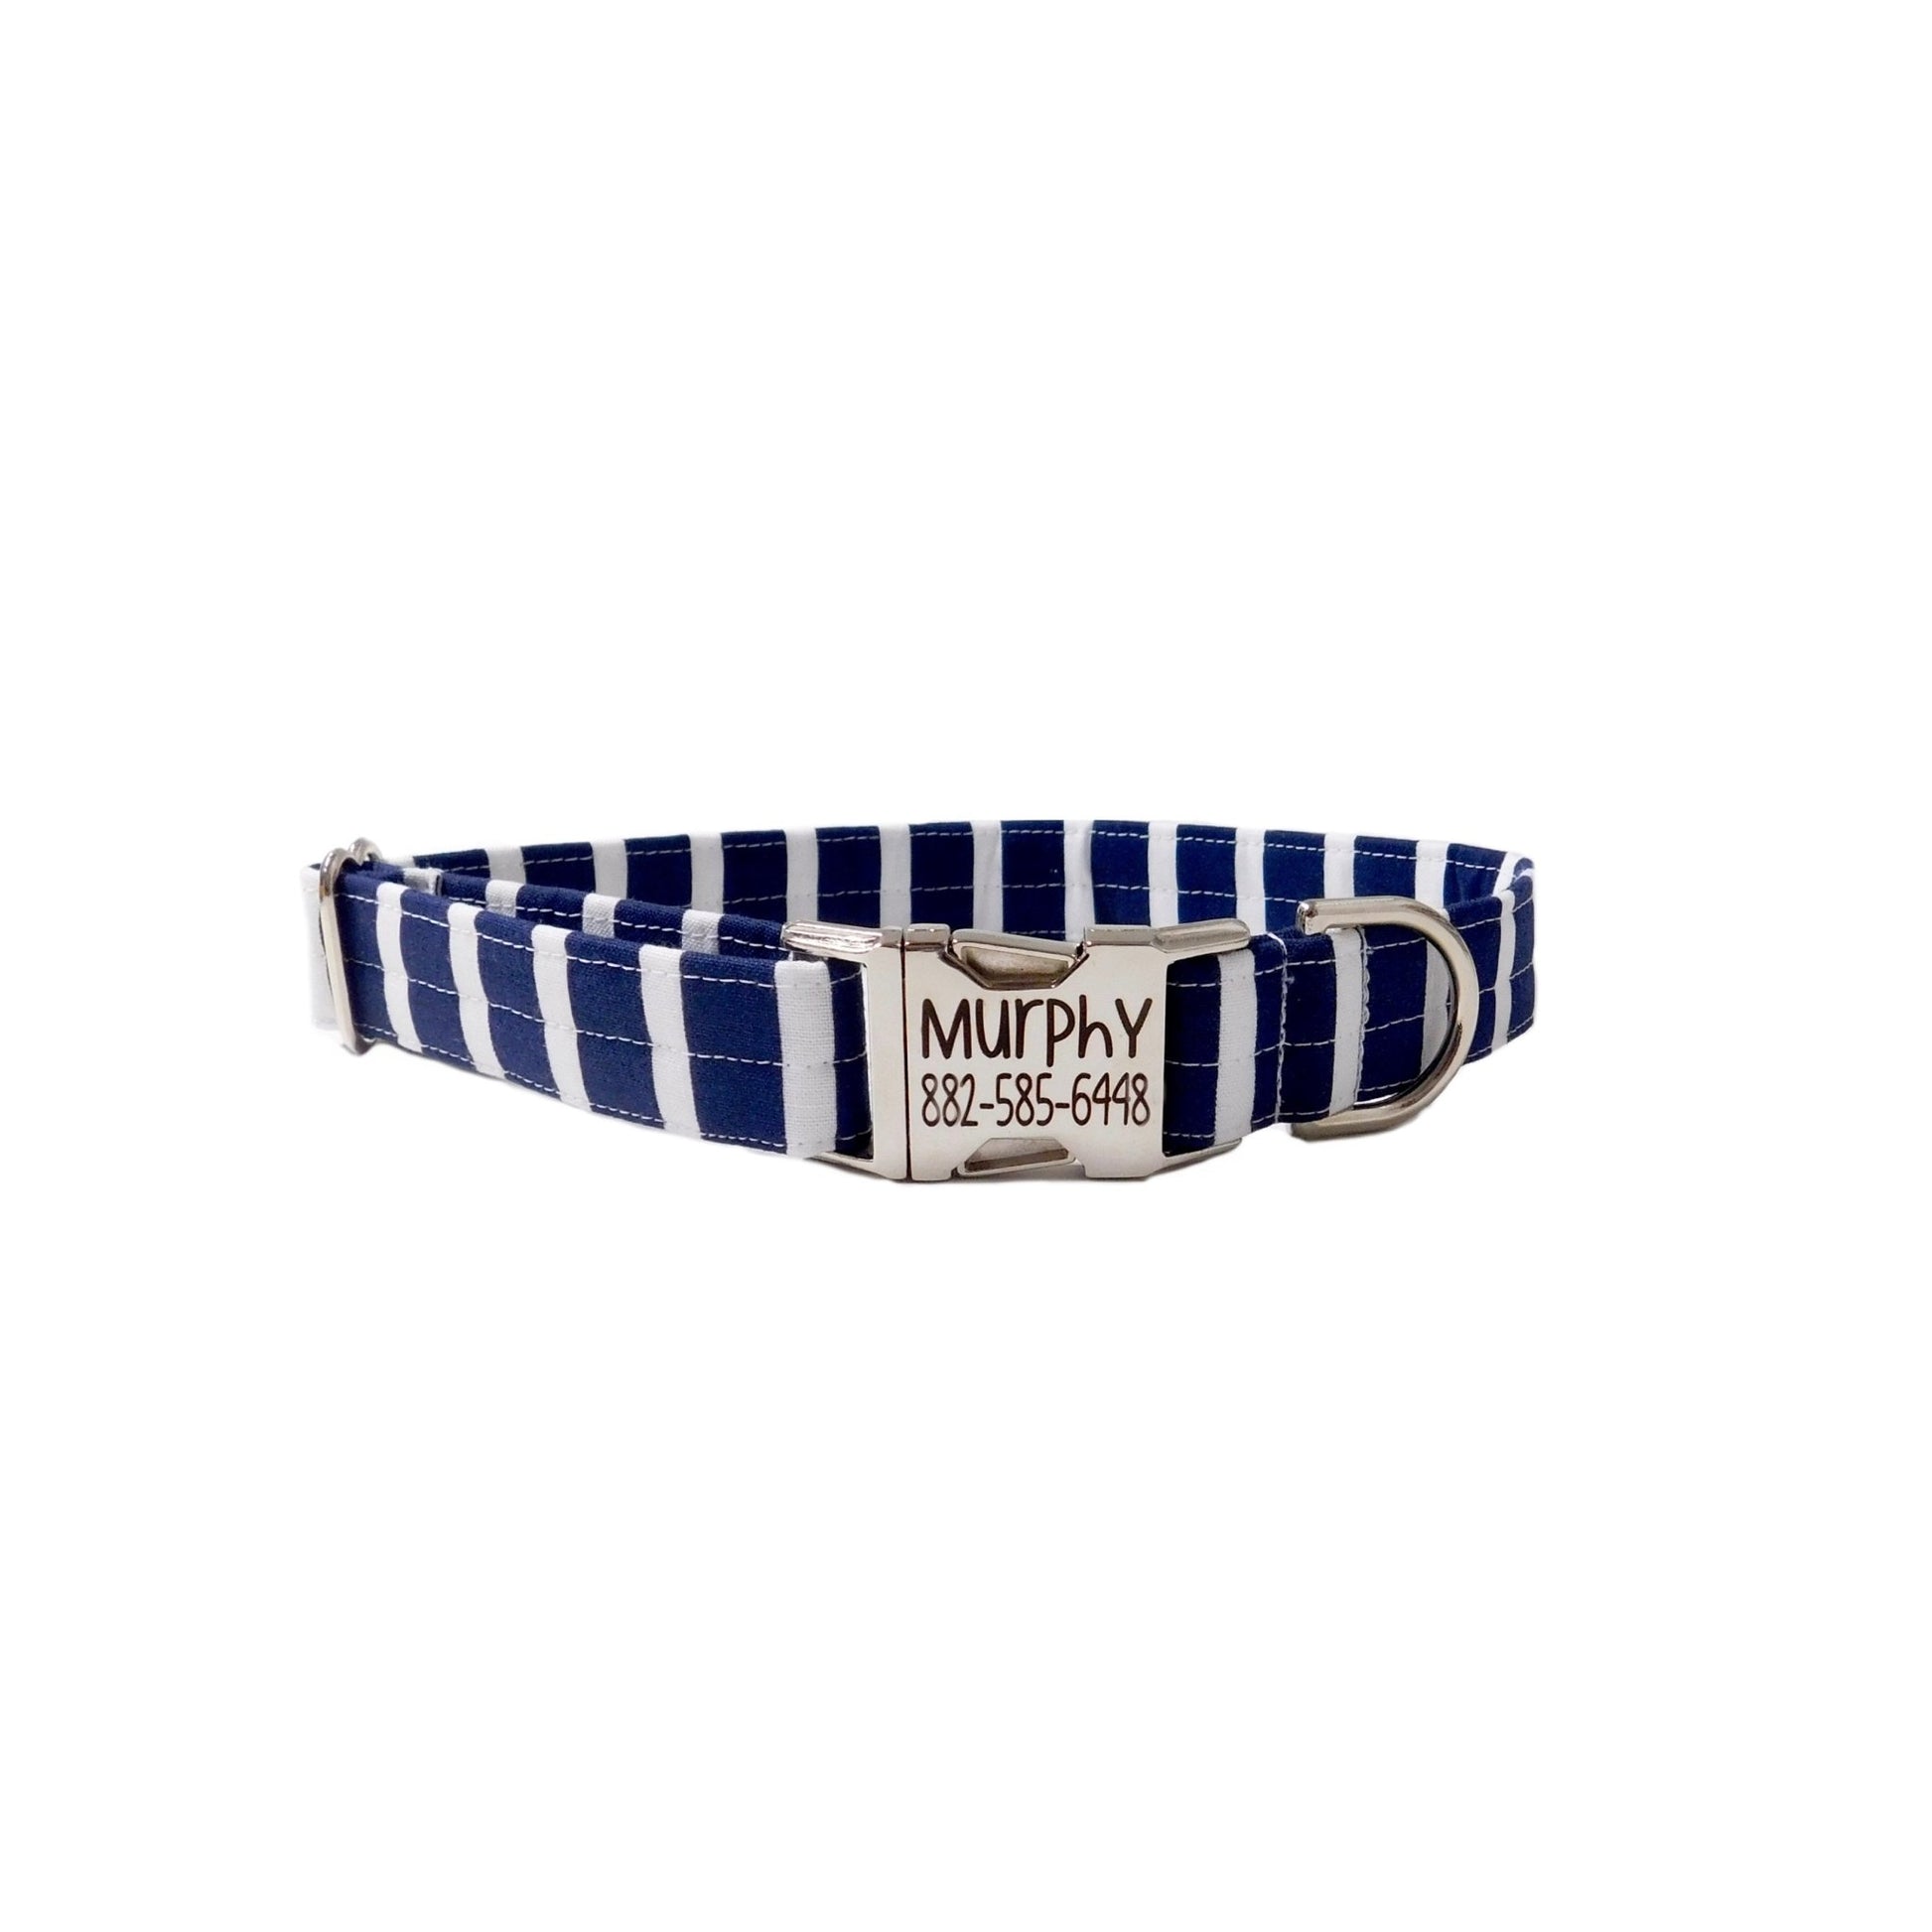 Navy Nautical Stripes Dog Collar - Fabric Style - muttsnbones